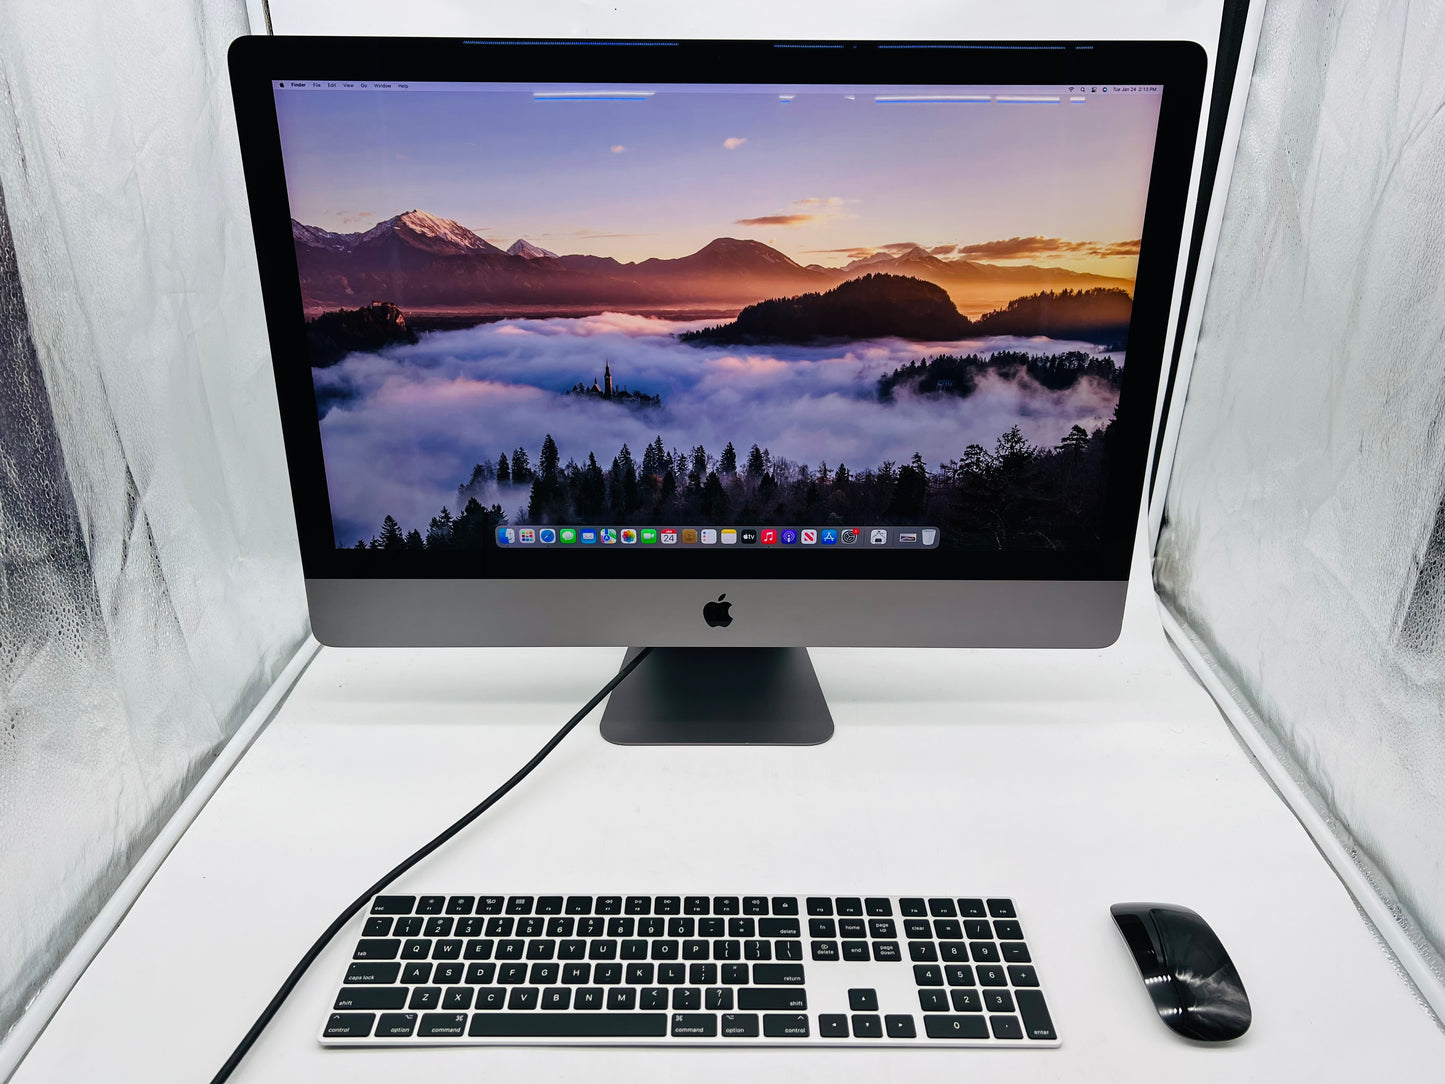 Apple 2017 iMac Pro 5K Retina 3.0GHz 10-Core Xeon W 64GB RAM 1TB SSD Vega 56 8GB